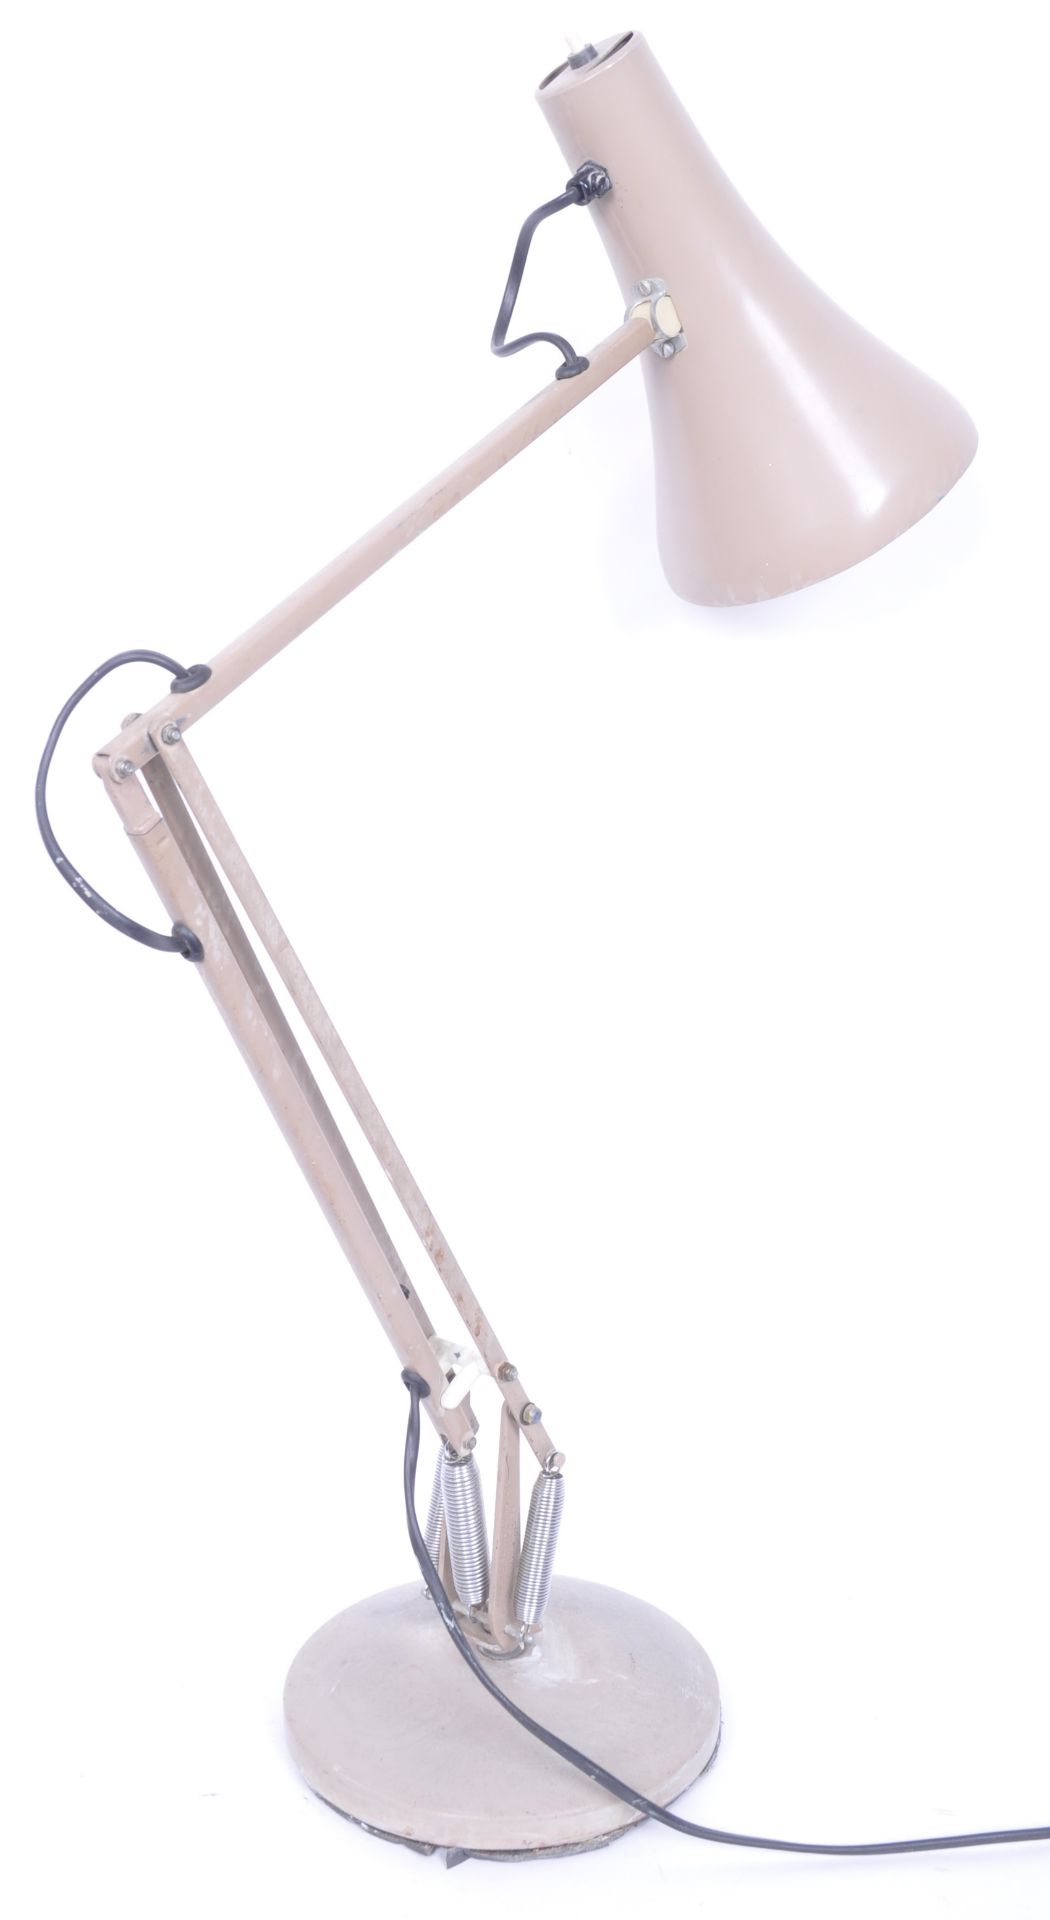 RETRO VINTAGE MID 20TH CENTURY DESK LAMP - Image 6 of 6